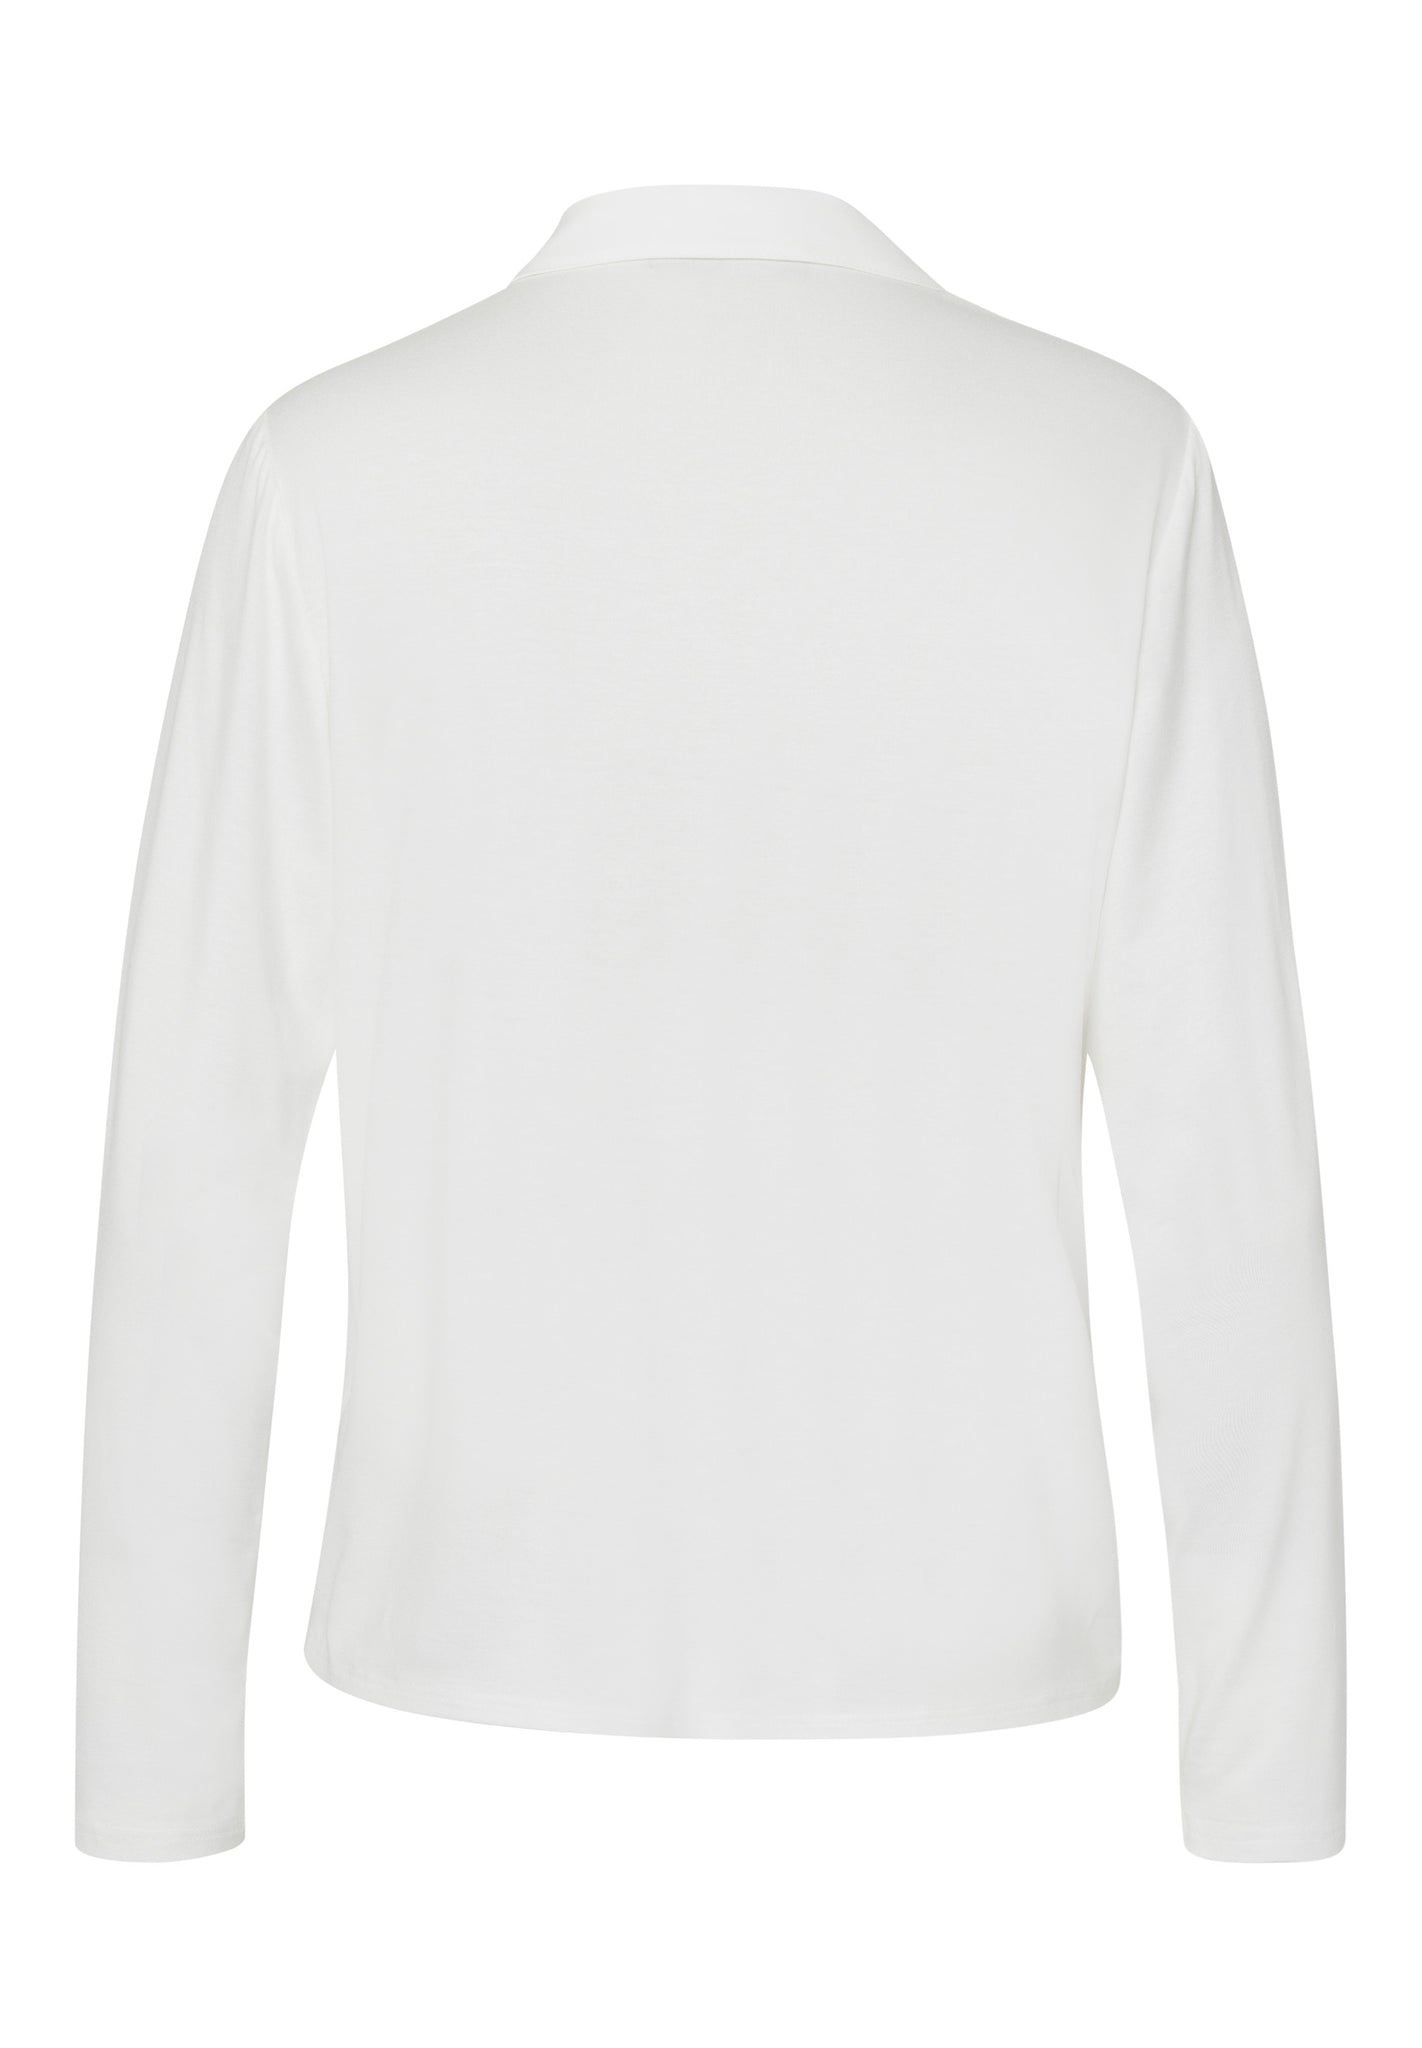 Long sleeve poloshirt (white&black)